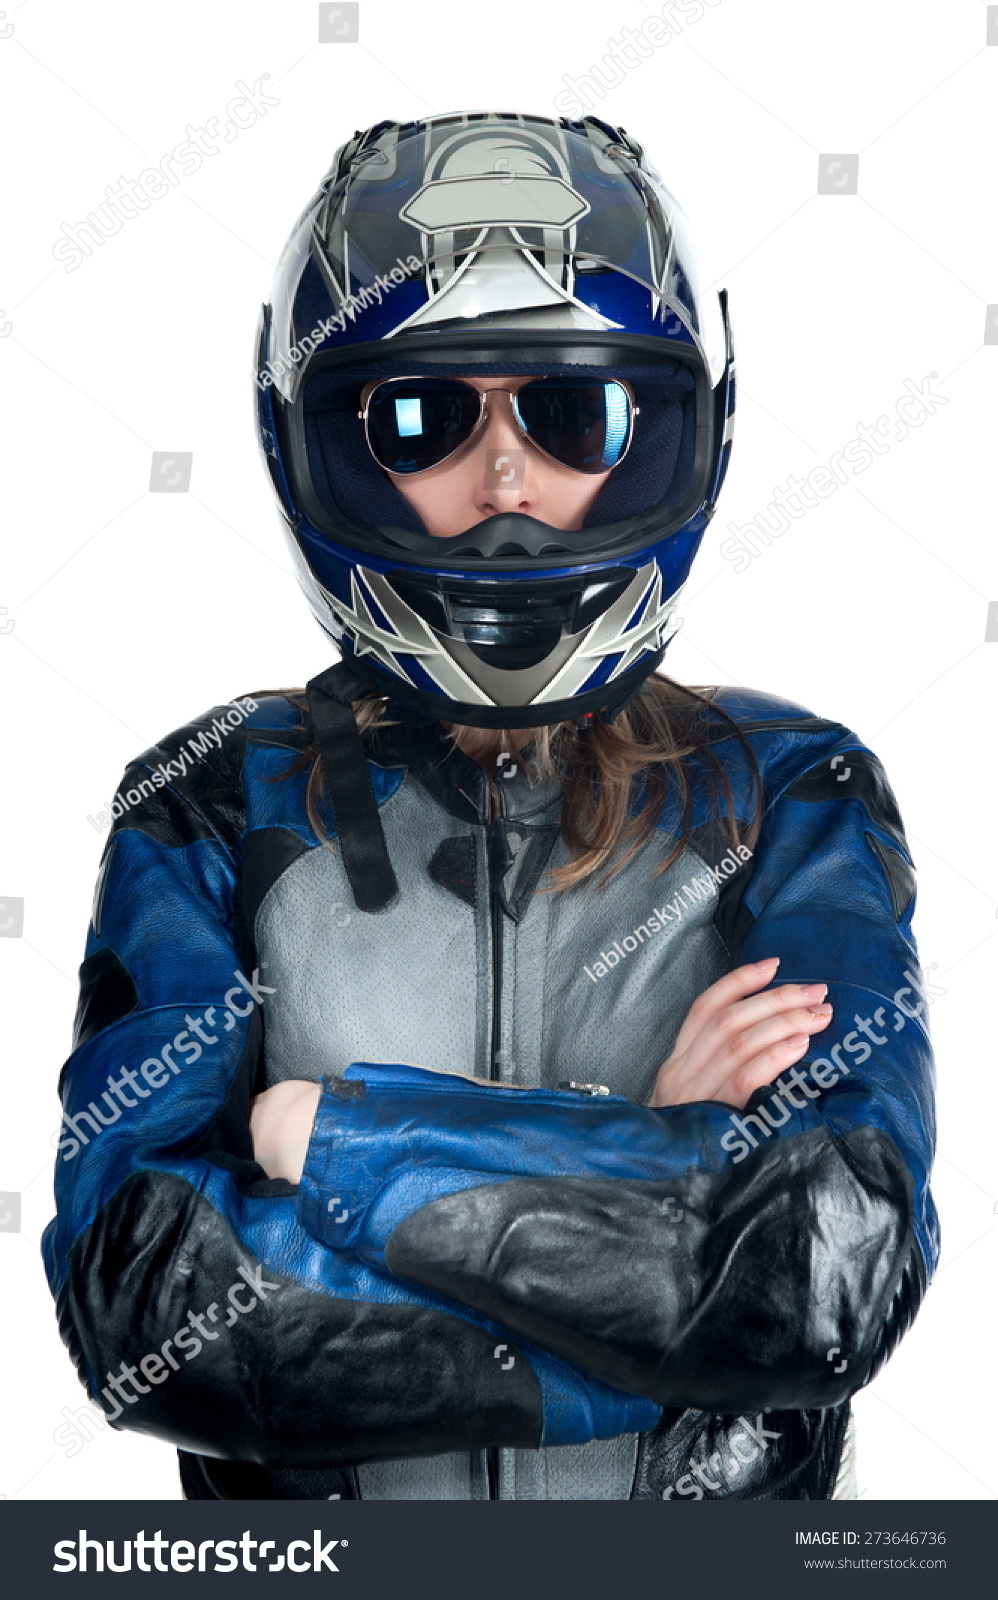 Beautiful Sexy Blonde Girl Motorcycle Helmet Stockfoto Jetzt Bearbeiten Shutterstock